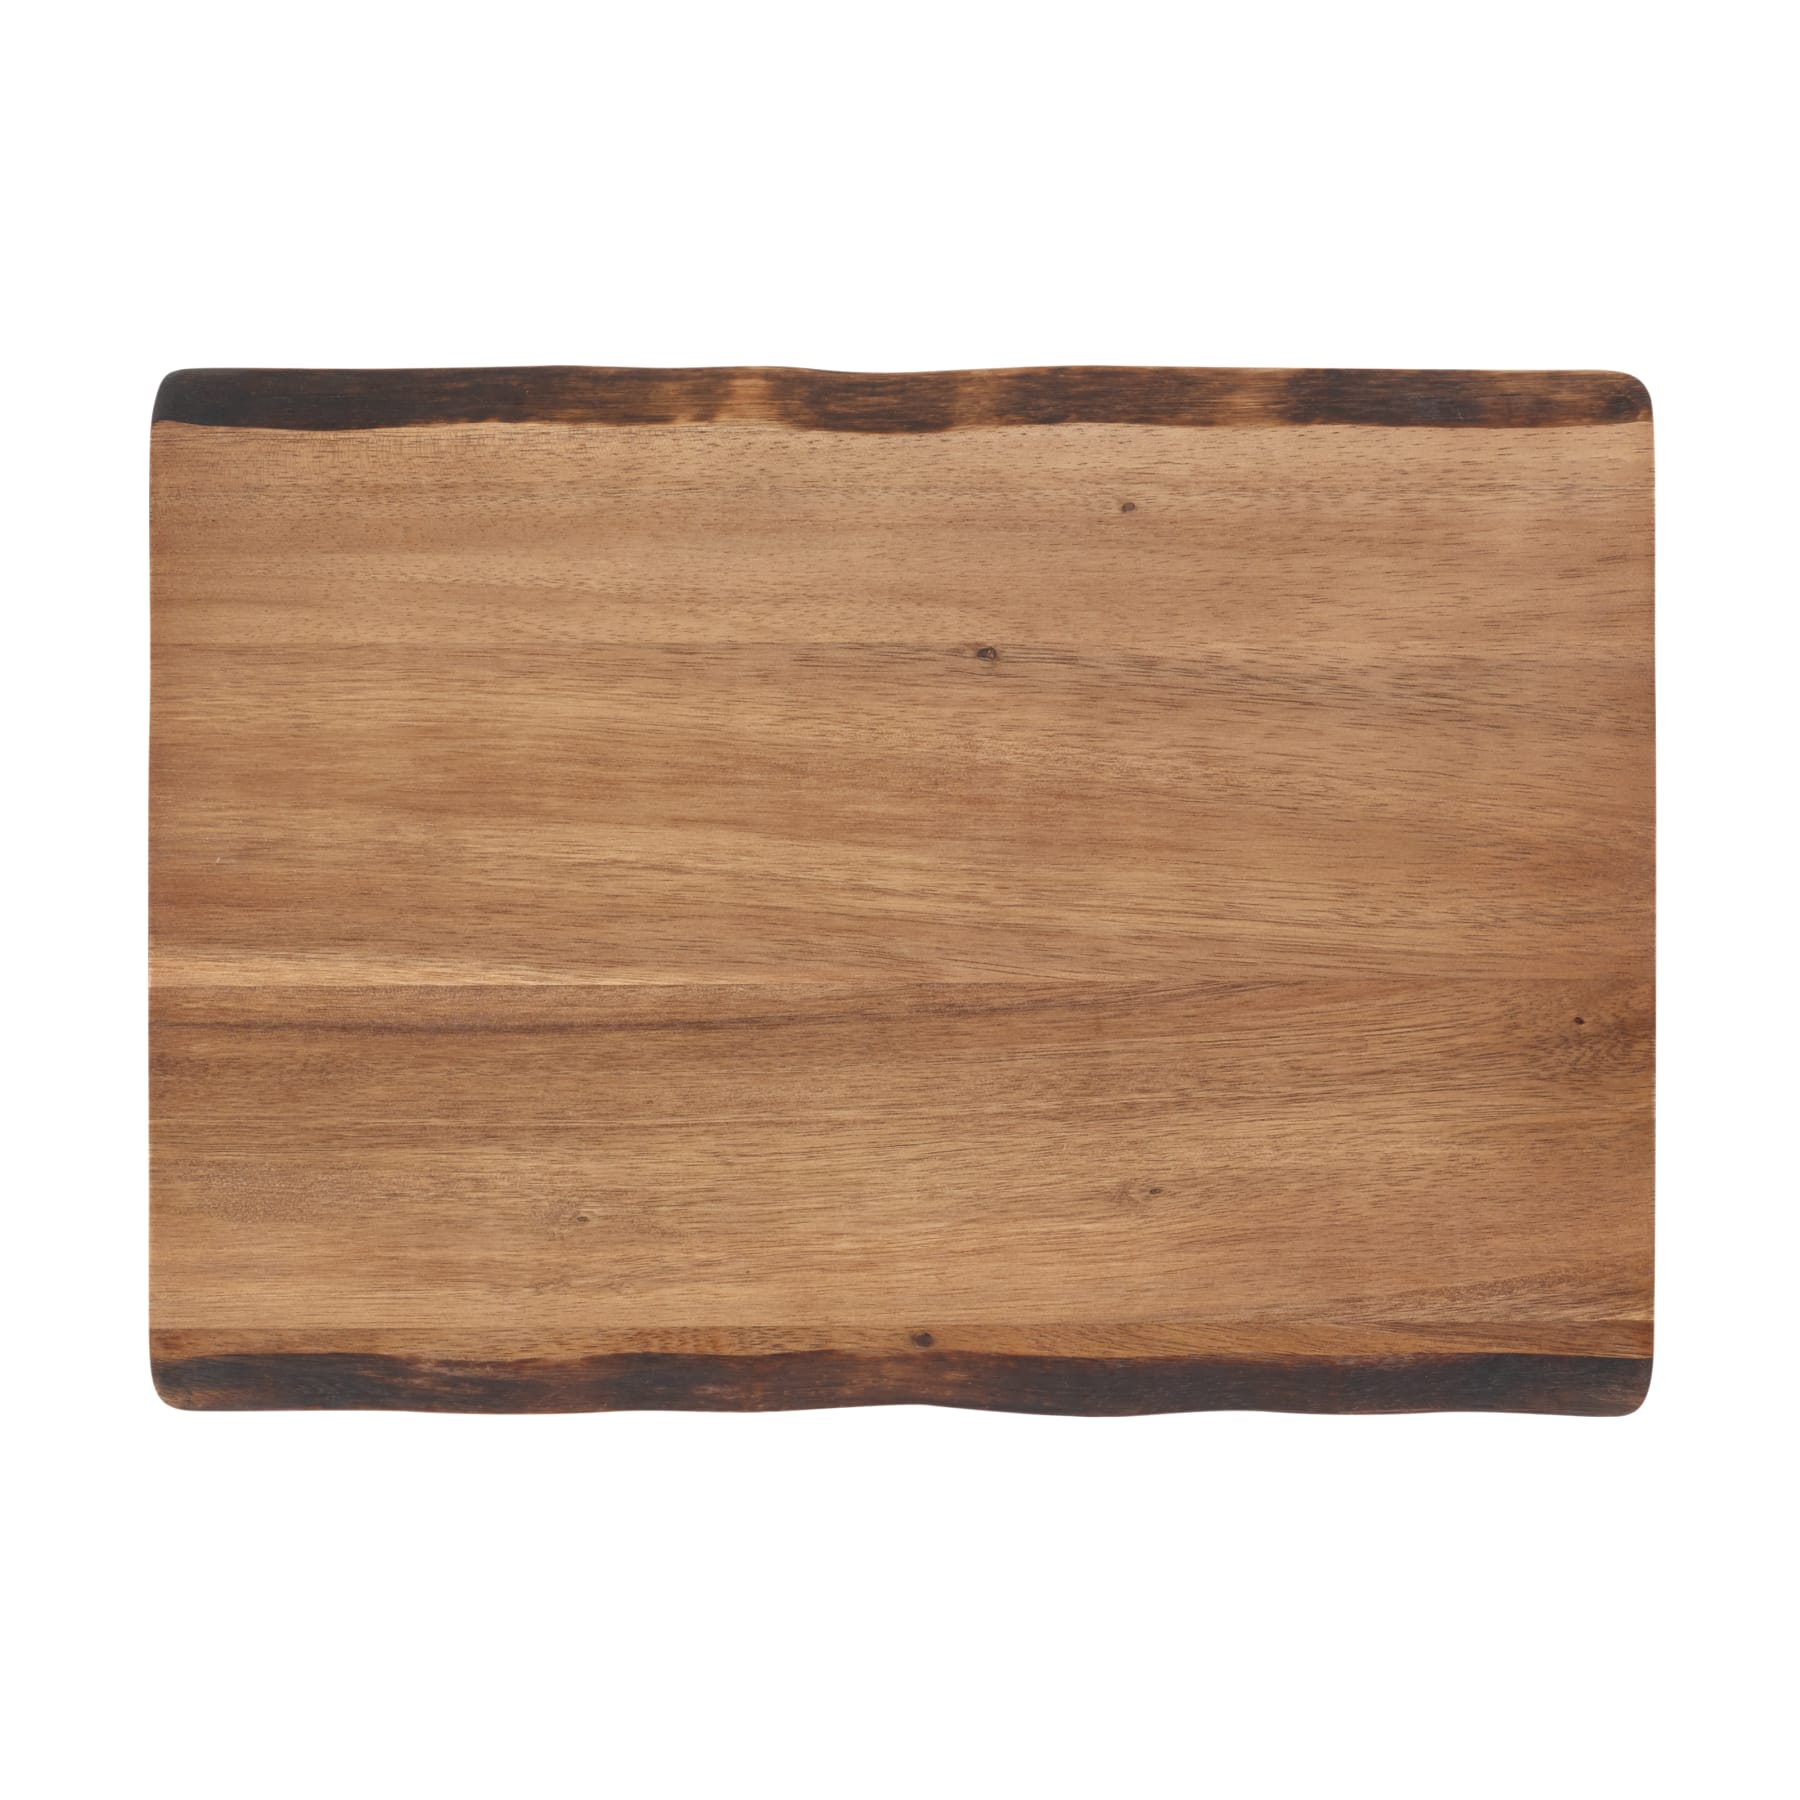 Accessories 17" x 12" Wood Cutting Board